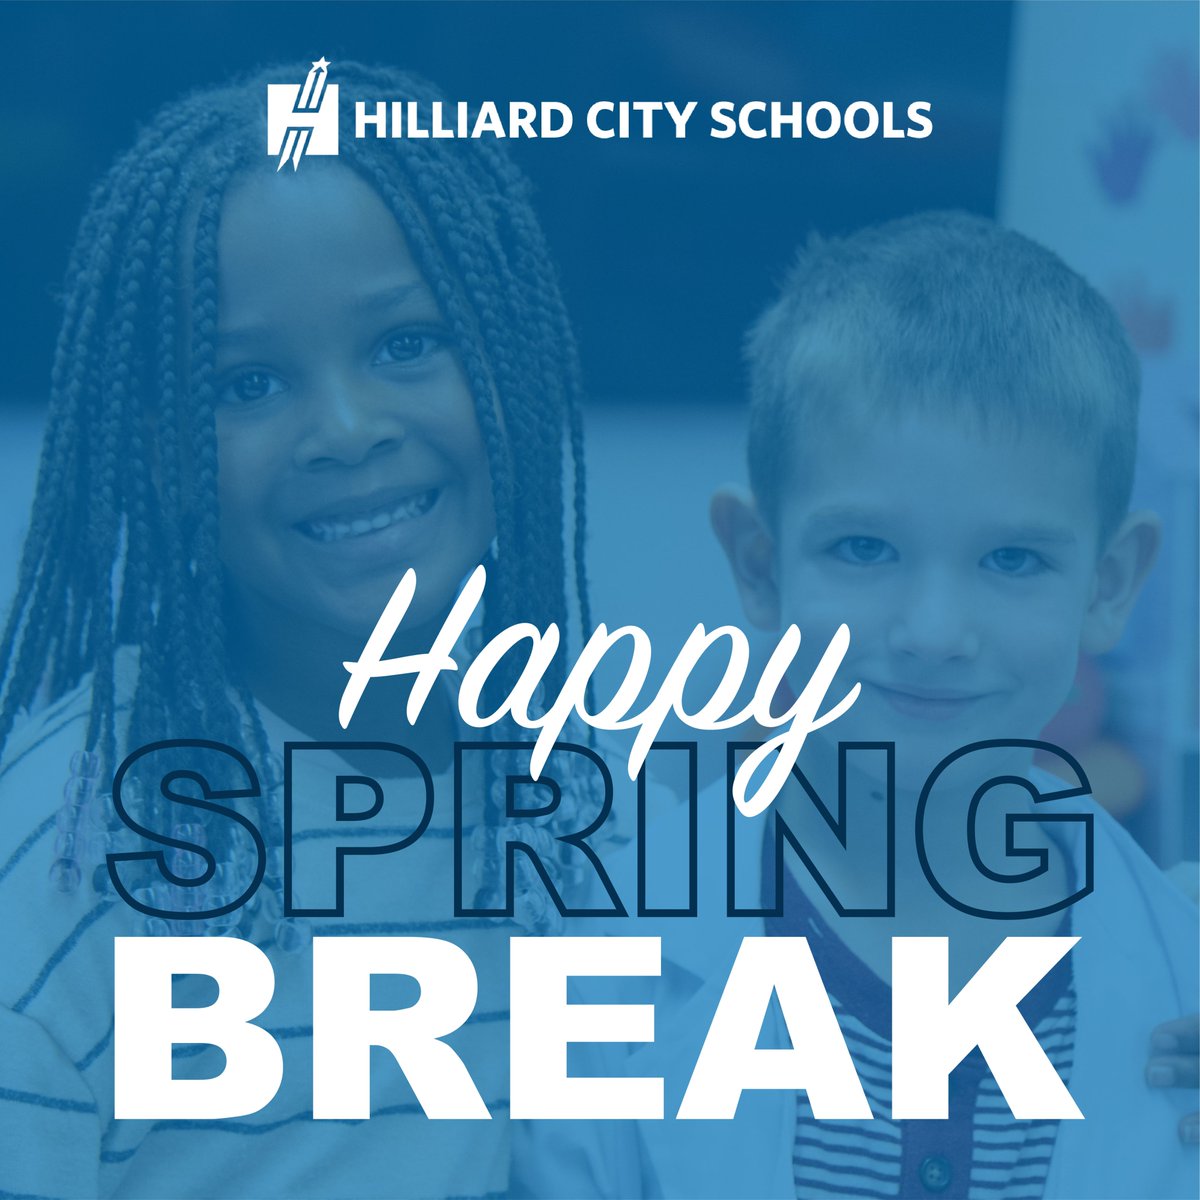 Enjoy a fantastic and safe spring break! See you all back on April 9th!